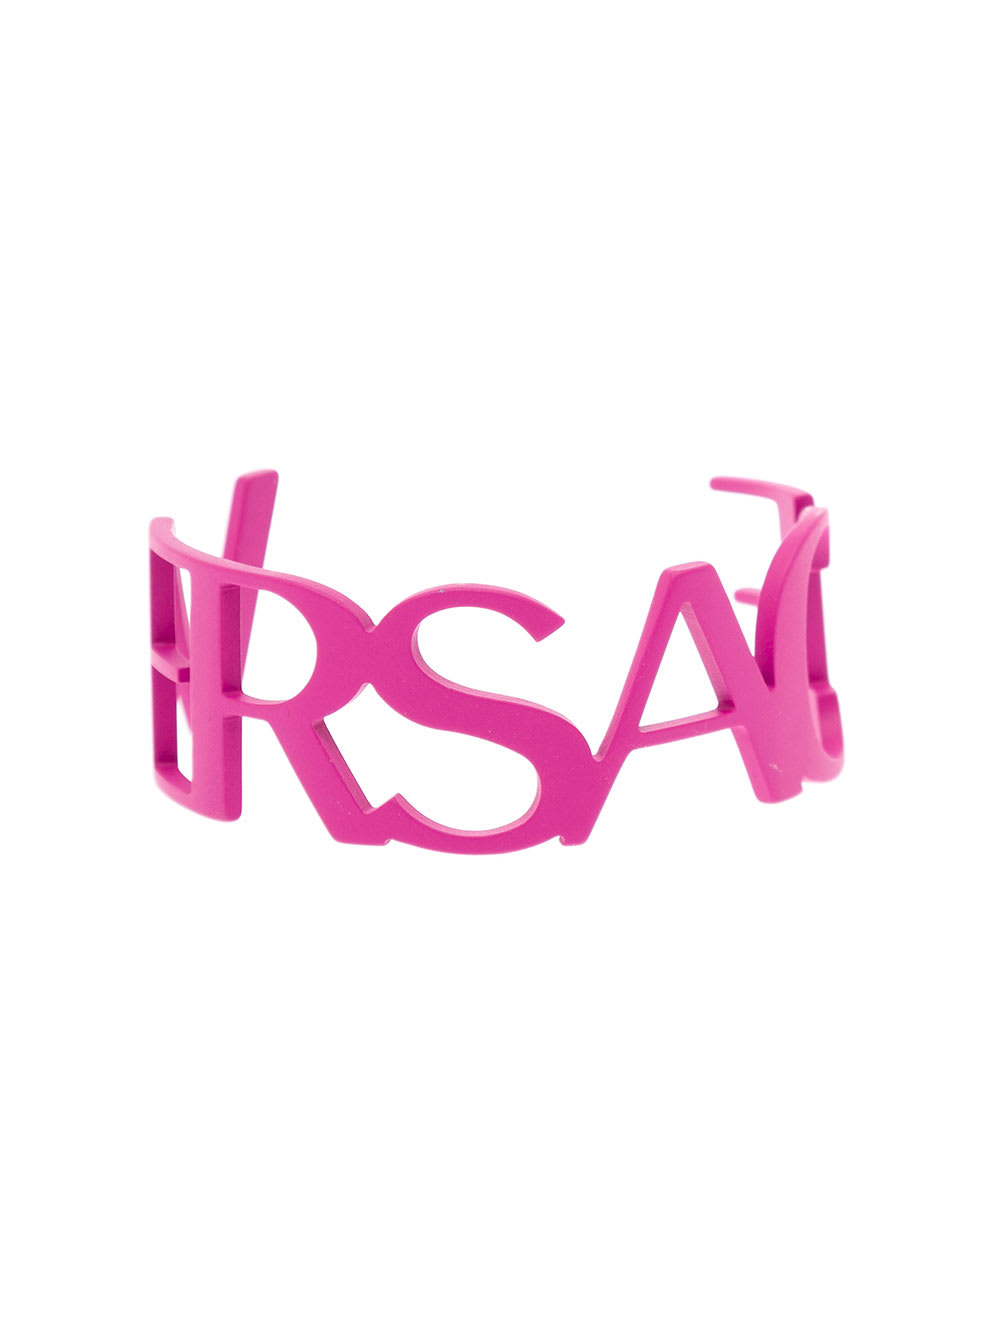 Versace Womans Pink Metal Bracelet With Logo